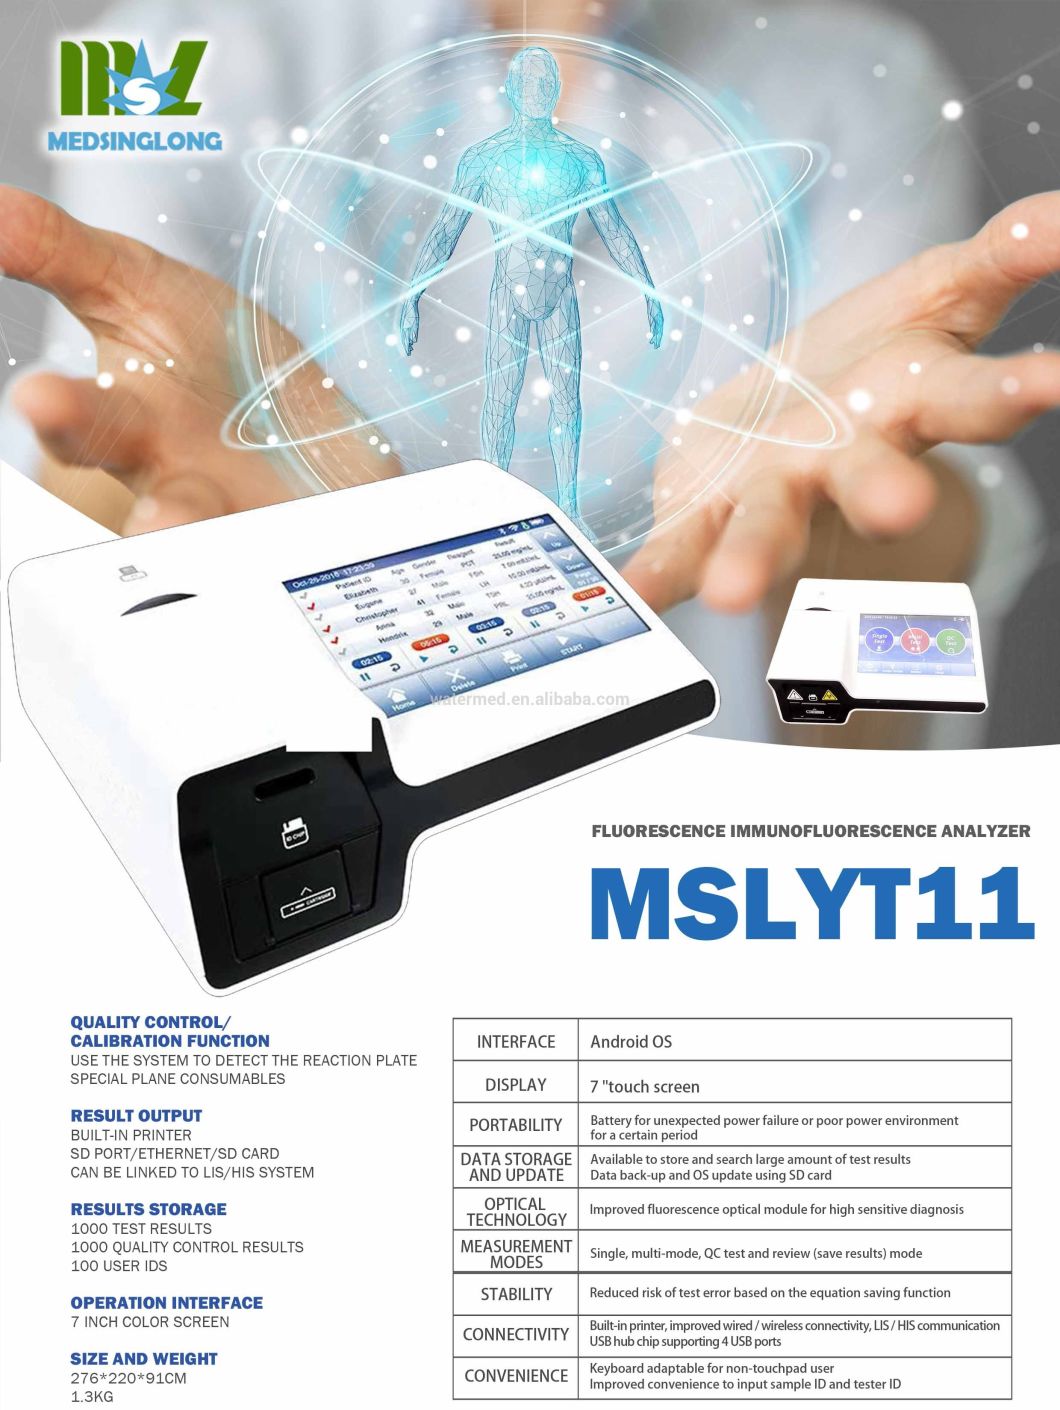 Best Price Android Ios Fluorescence Immunofluorescence Analyzer Mslyt11